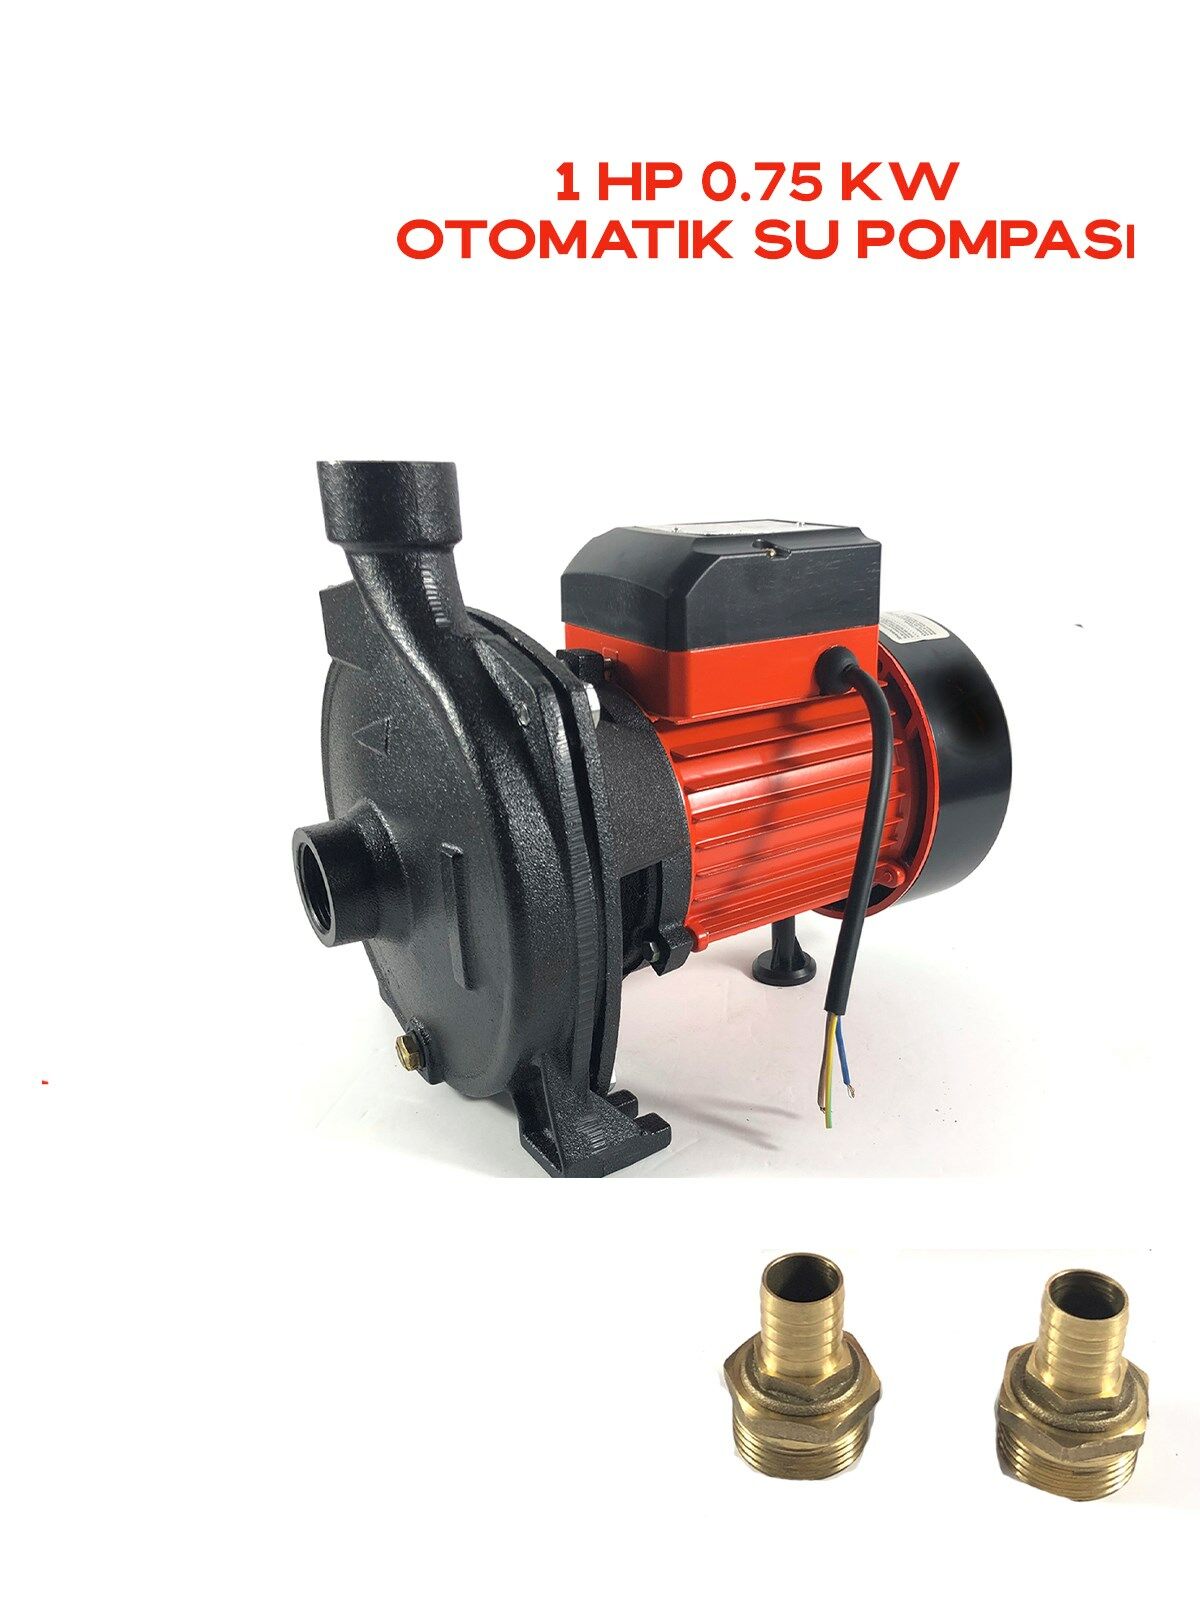 Otomatik Sistem Su Pompası 1hp 0.75 Kw Otomatik Pompa